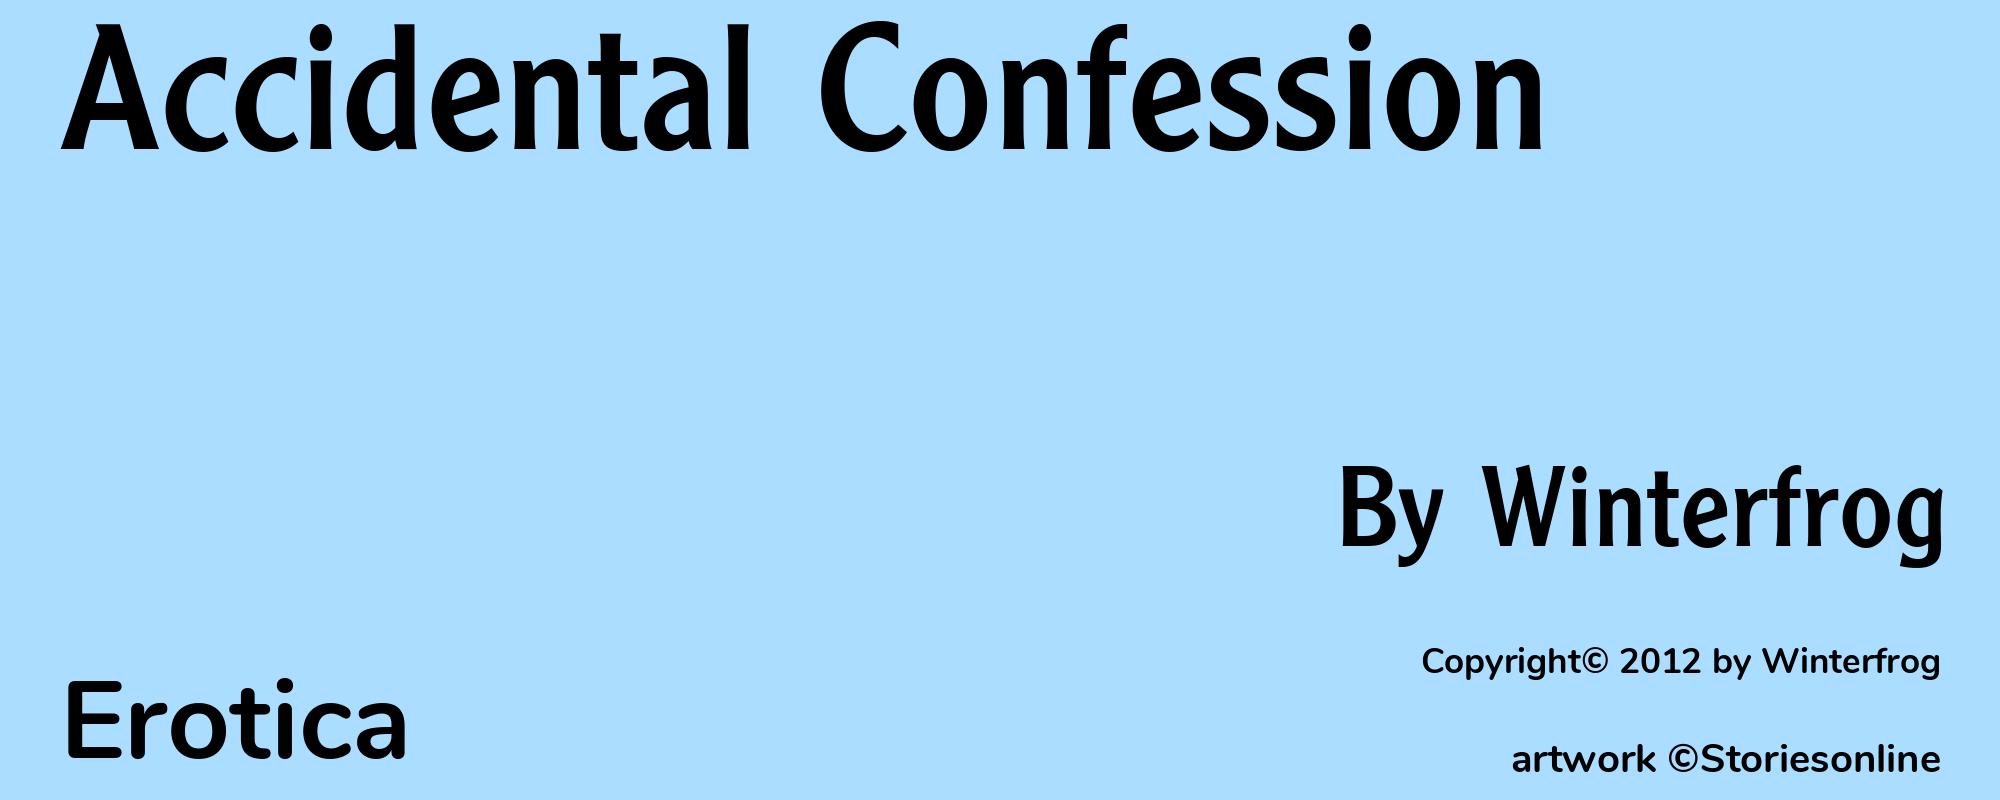 Accidental Confession - Cover